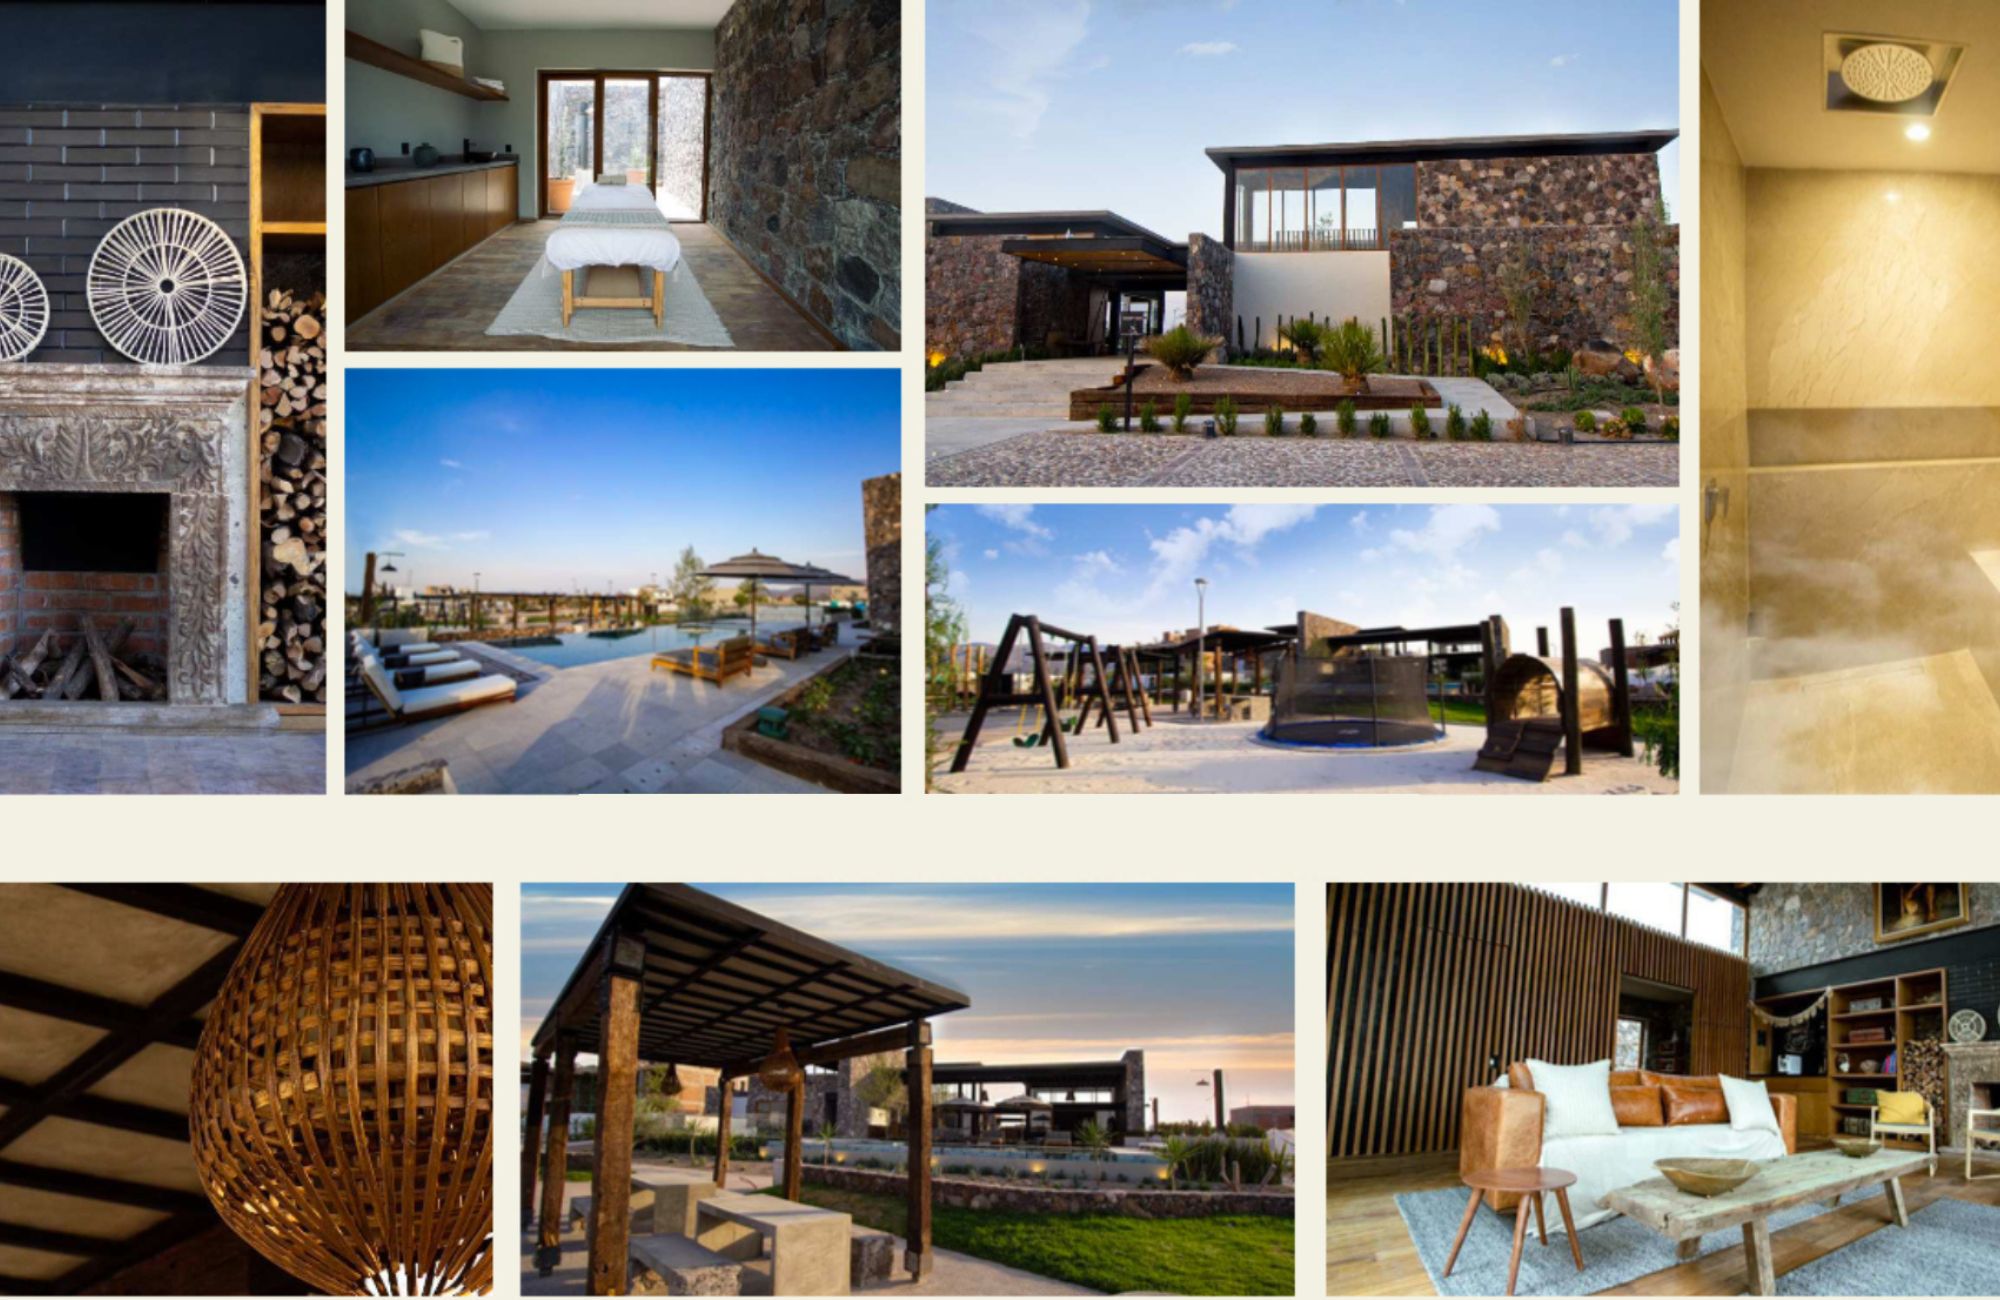 503 m2 lot in luxury community with amenities, for sale San Miguel de Allende.